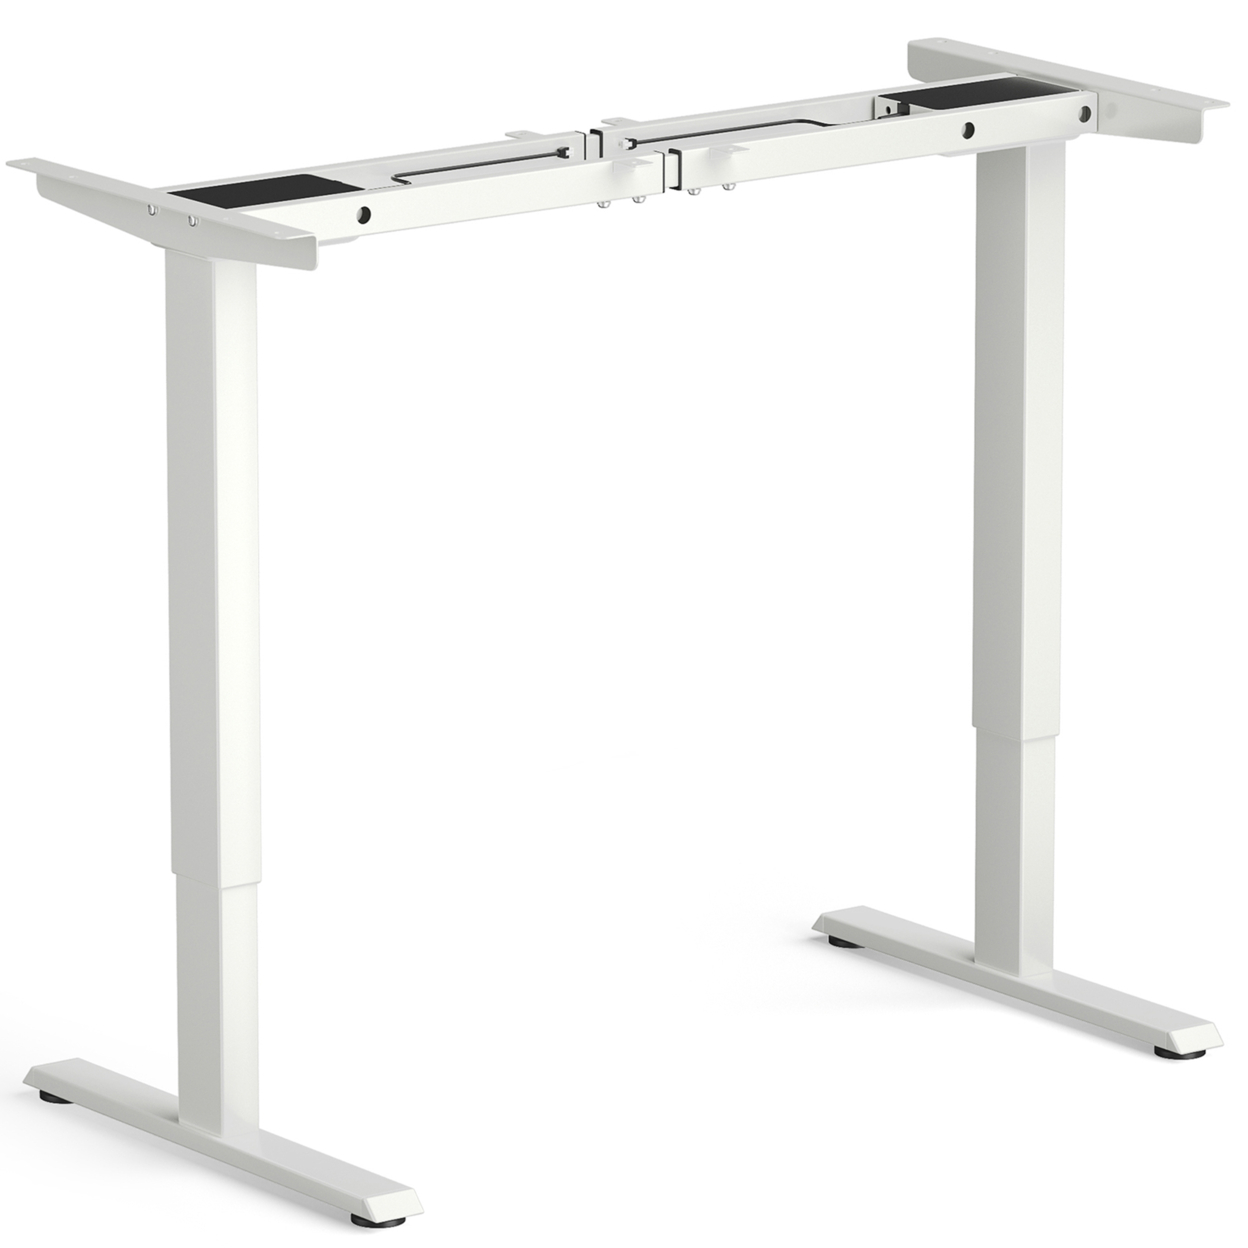 Dual-Motor Stand Up Desk Frame Workstation Base W/ Adjustable Width & Height - White